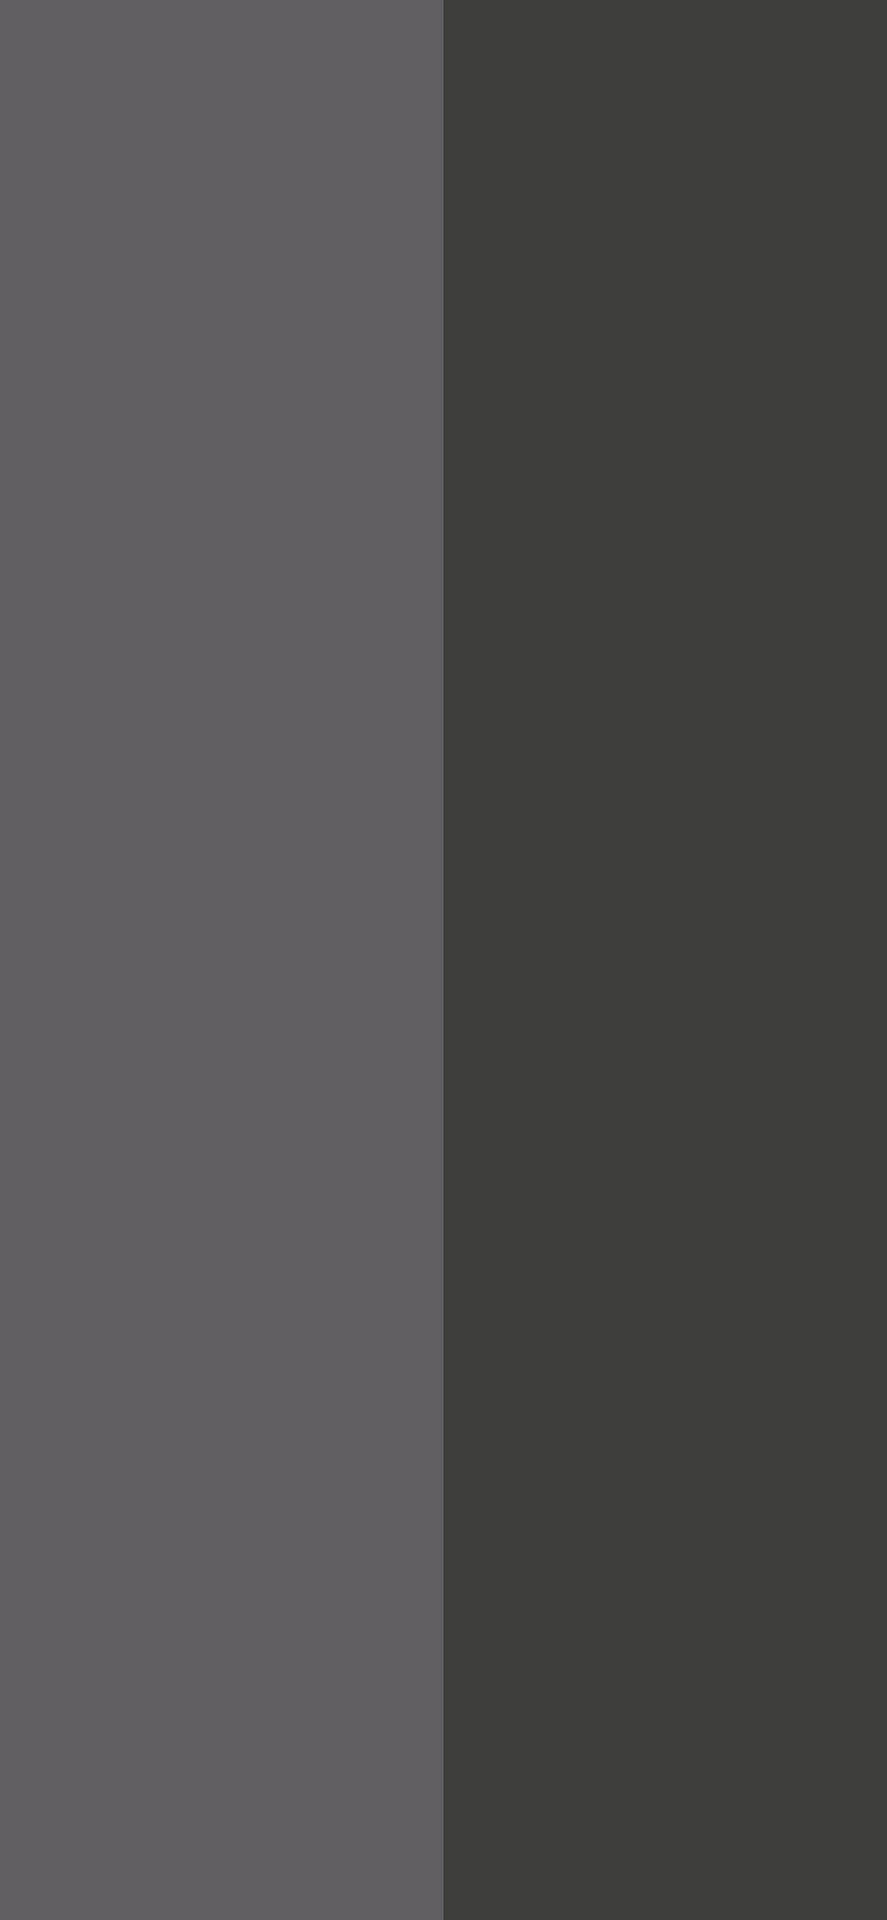 A Split Of Shades Of Gray Wallpaper